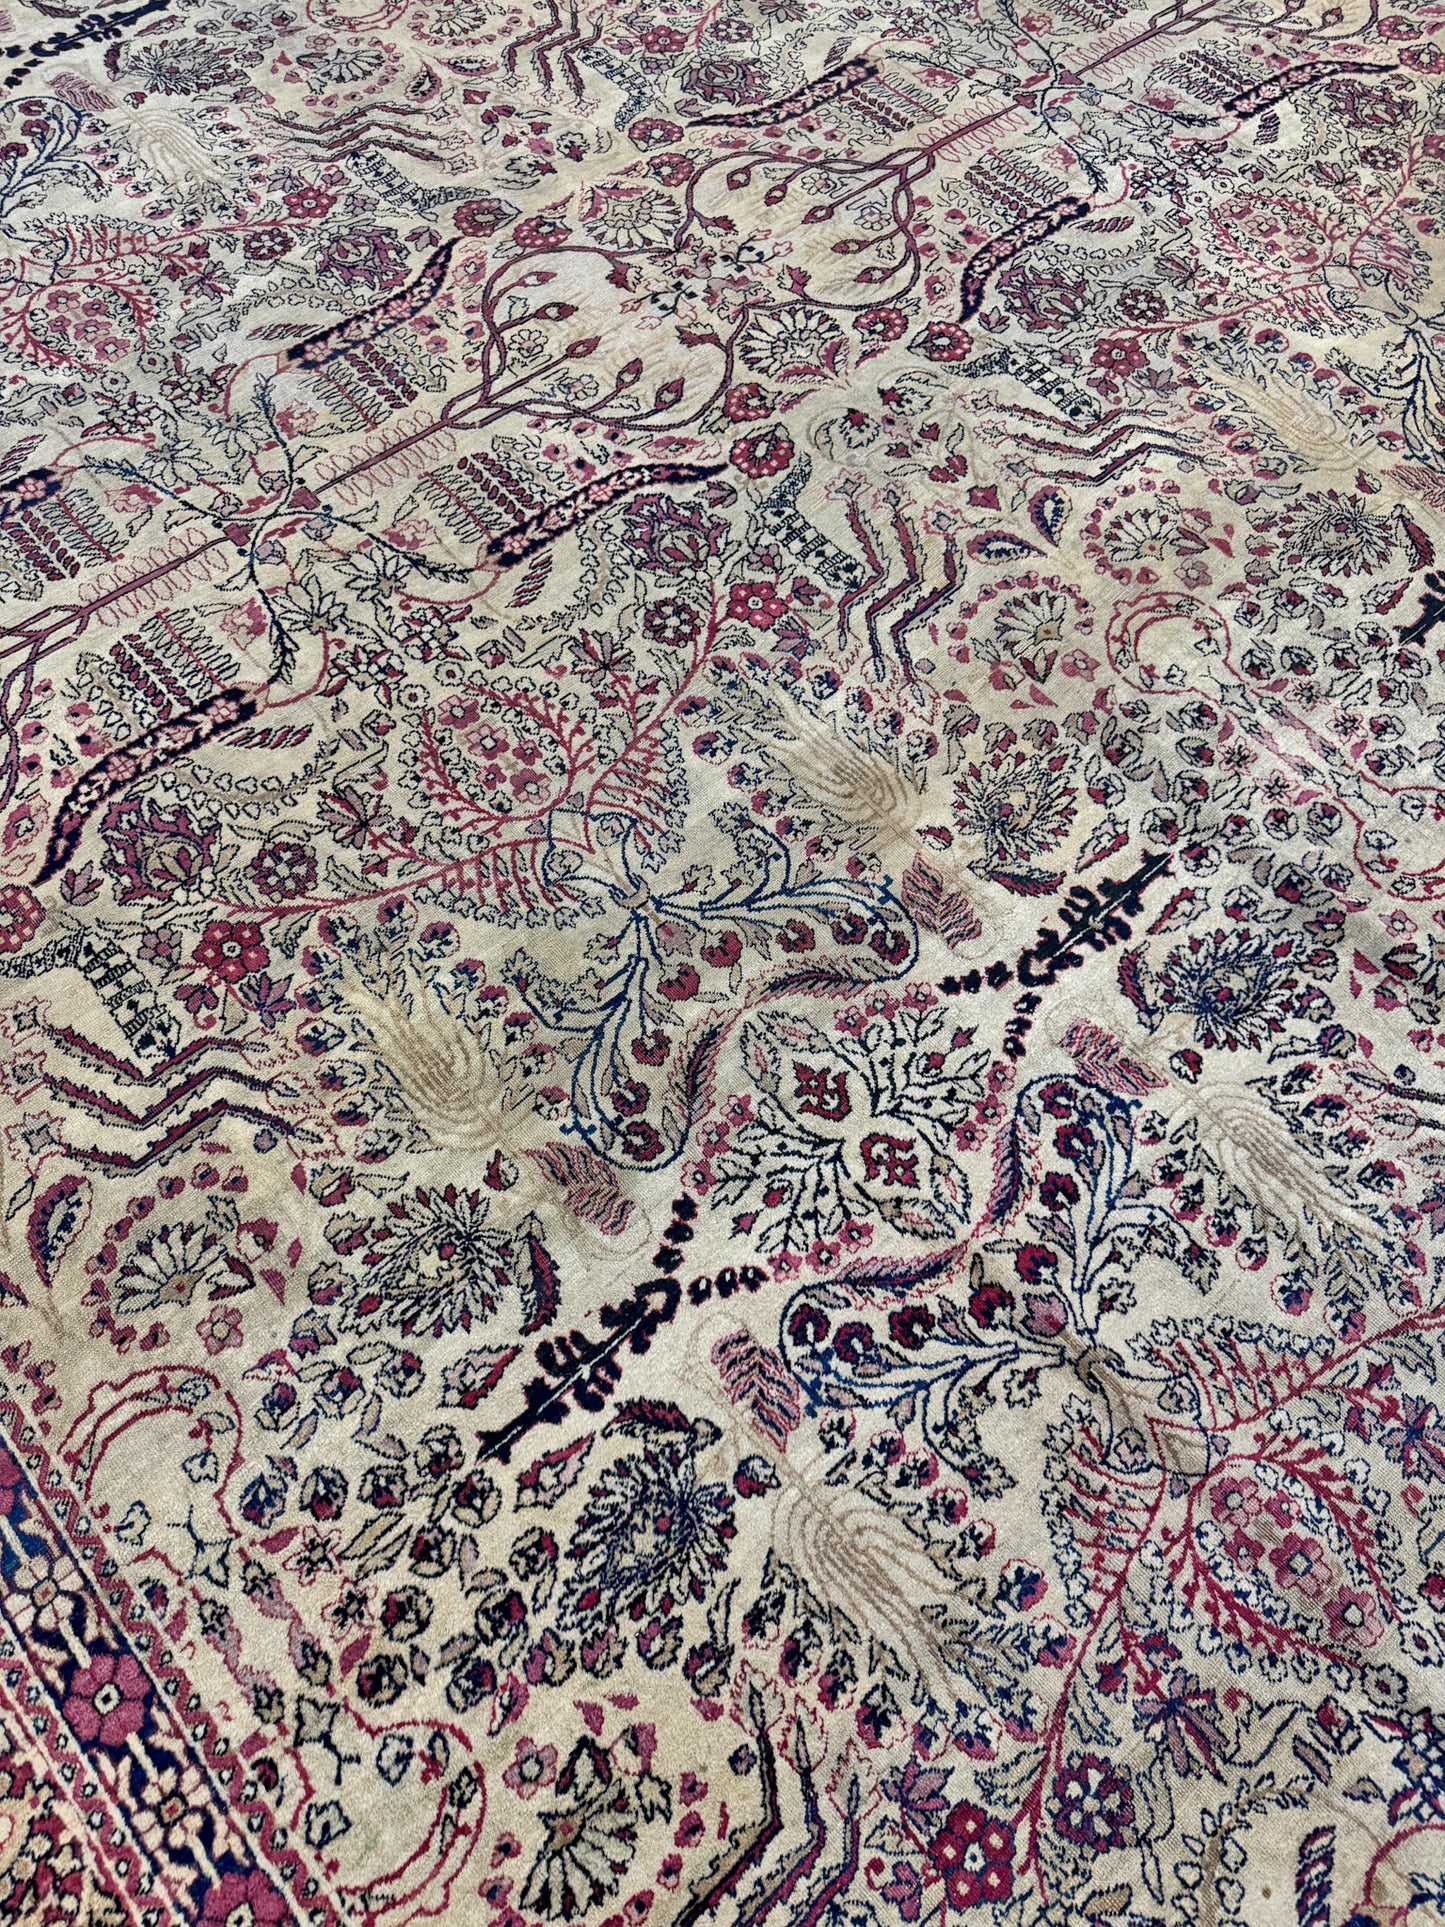 Antique Persian Lavar Kerman